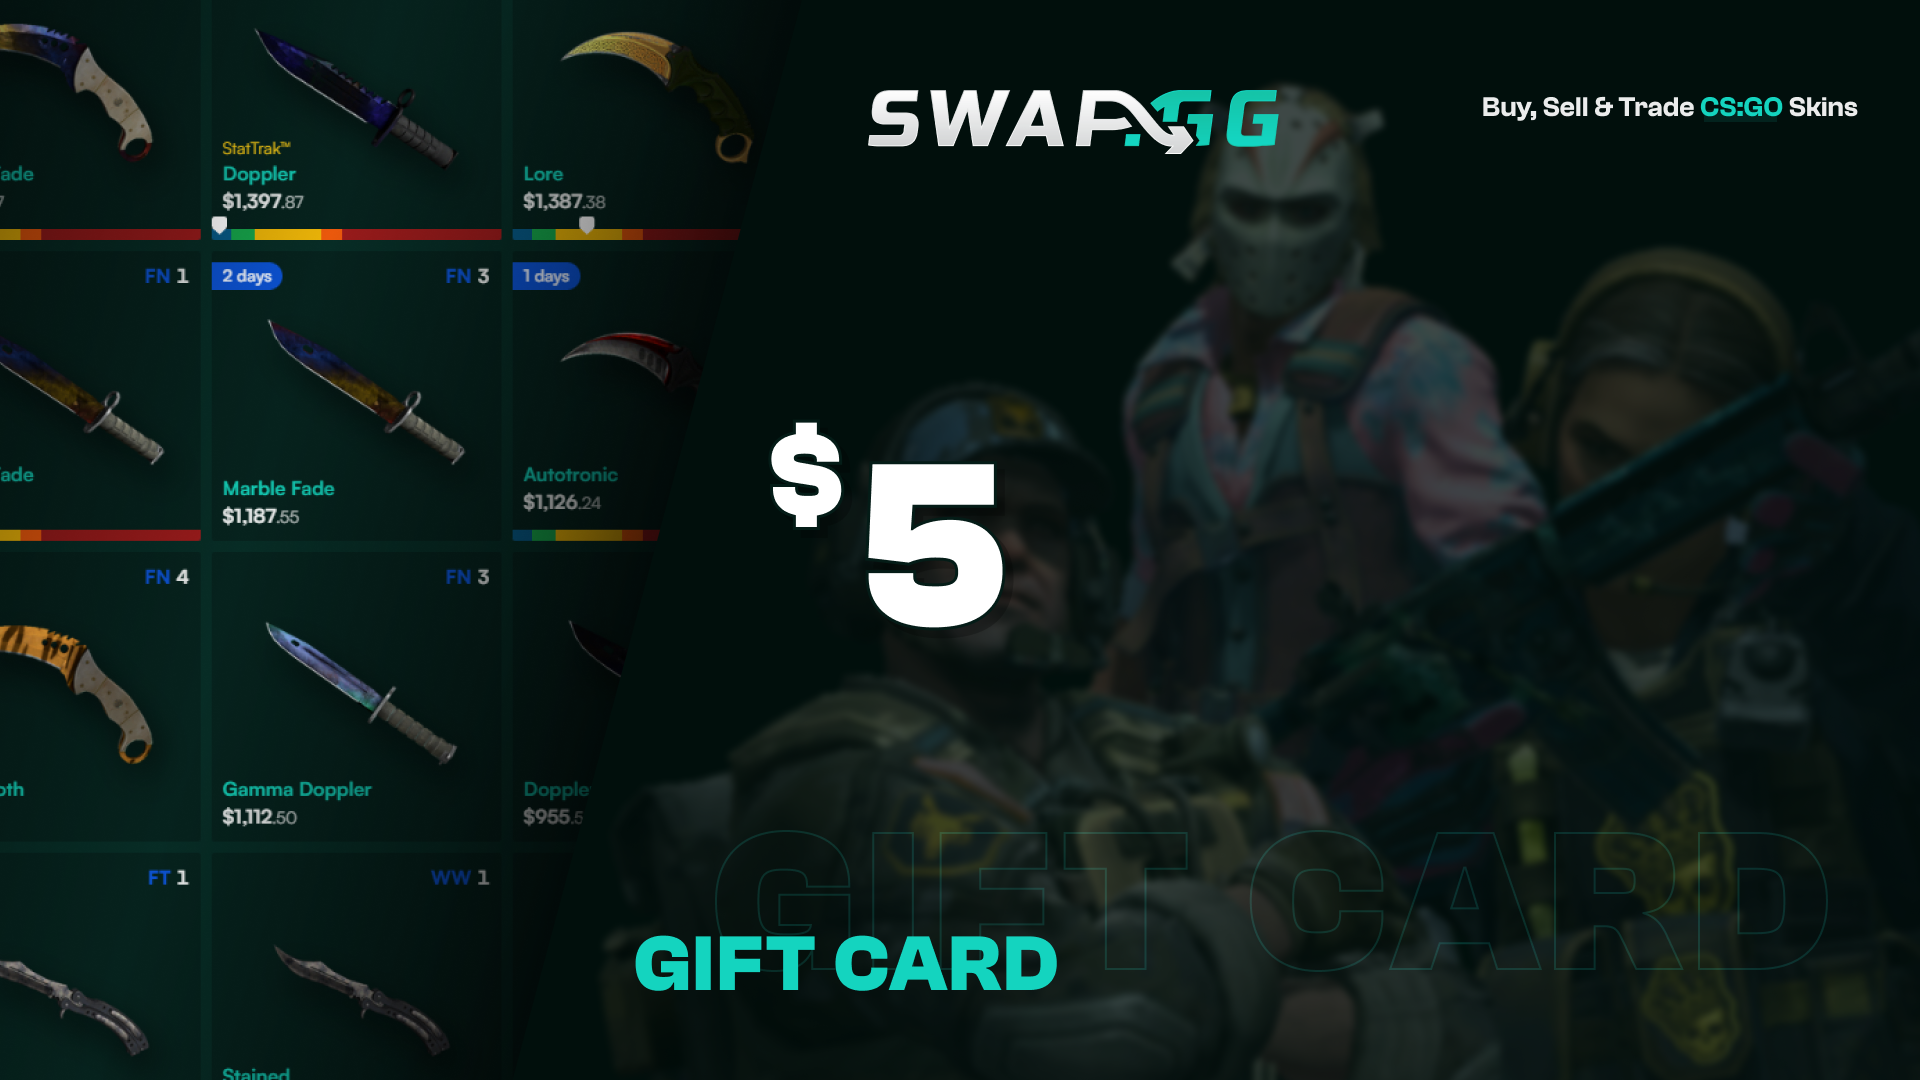 Swap.gg $5 Gift Card $3.97